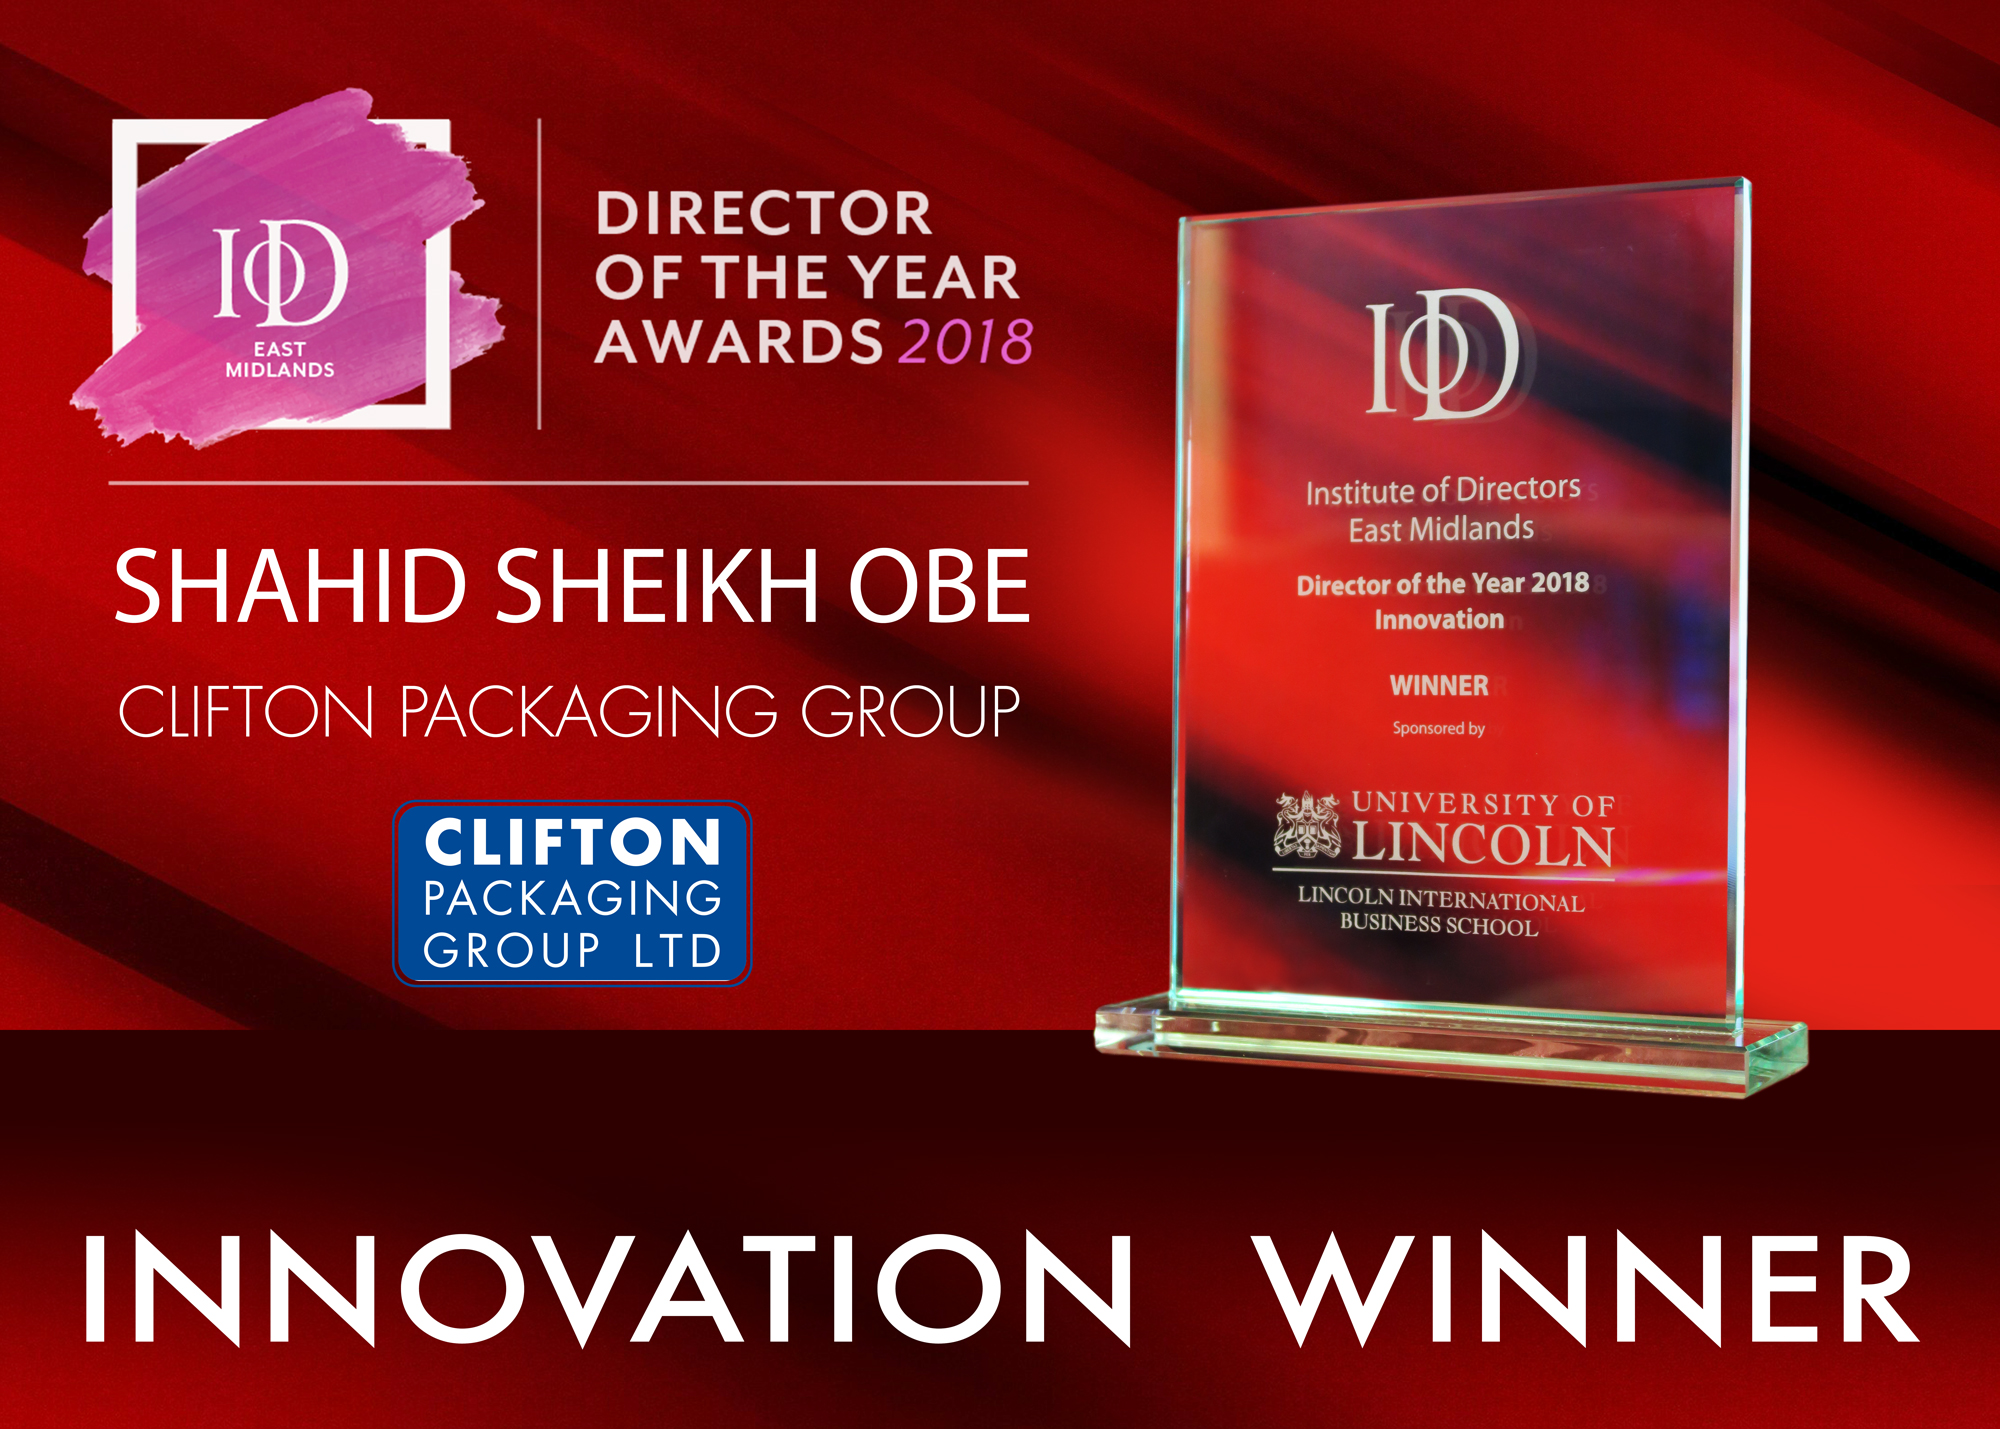 IoD - Director of the Year Awards 2018 - Innovation Winner